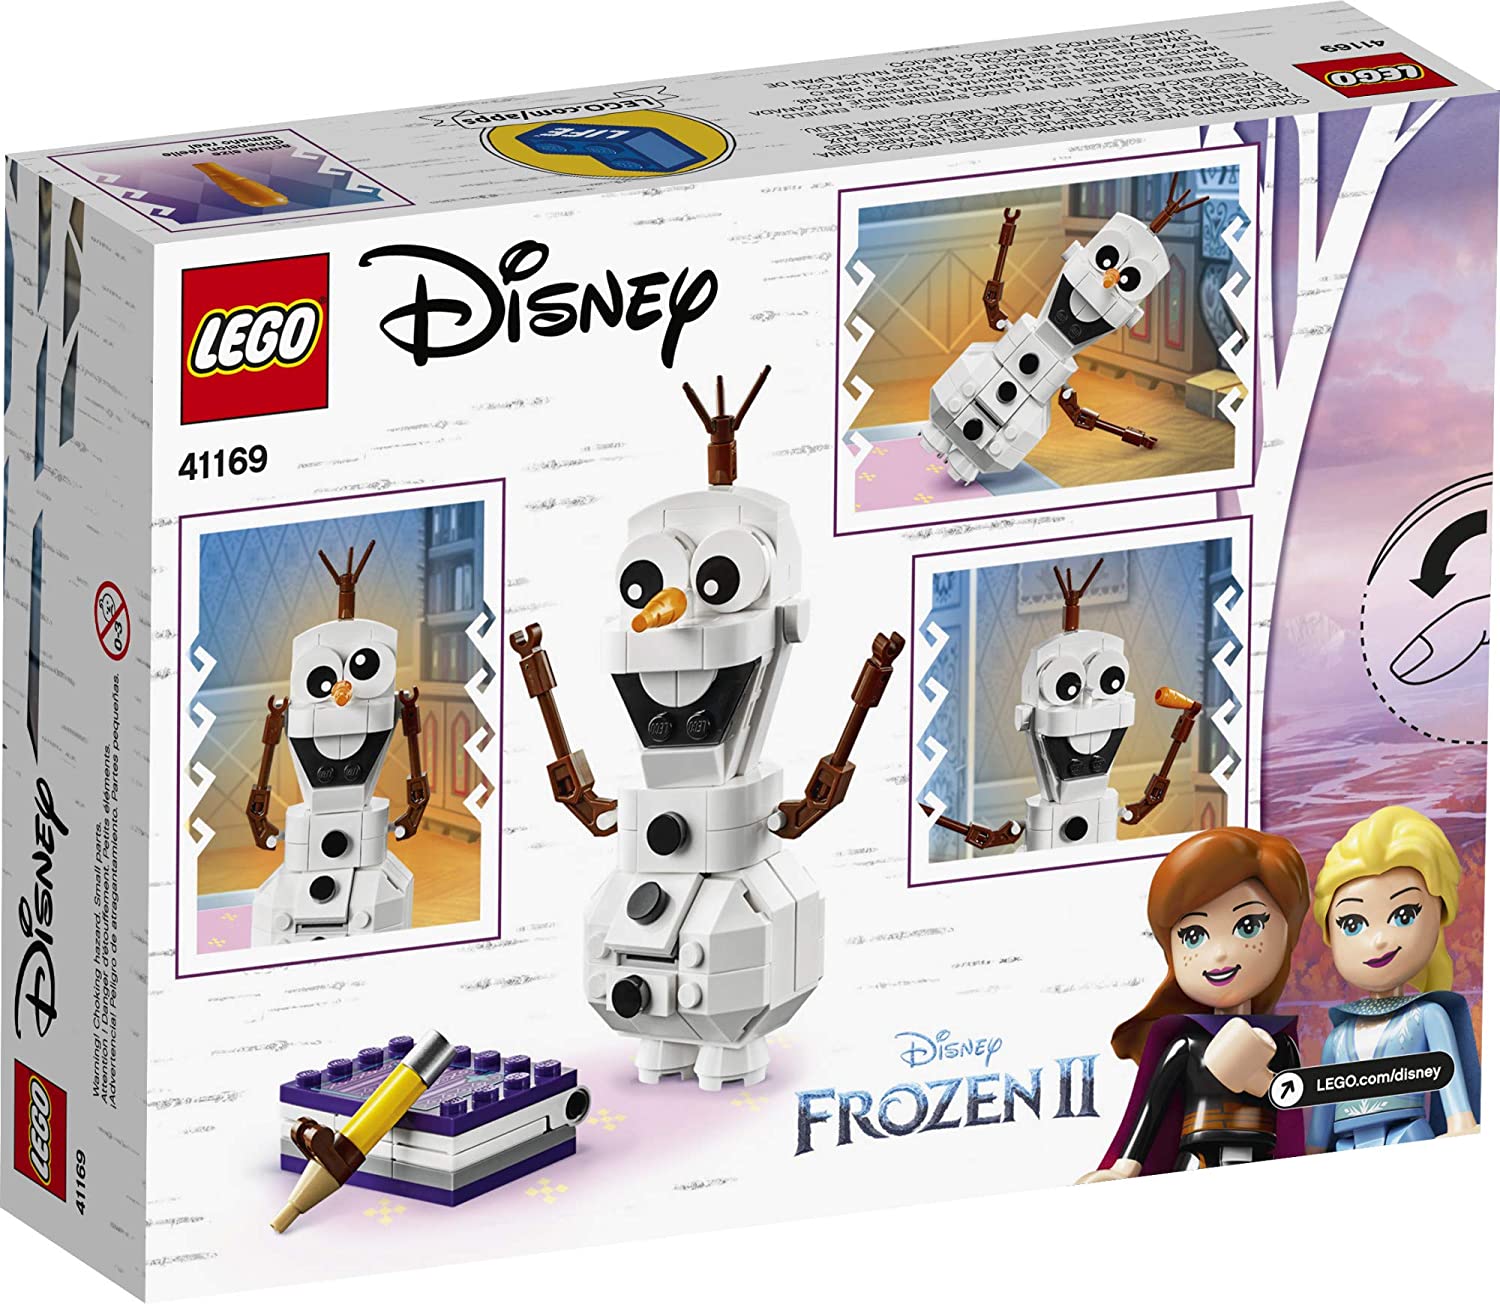 Få kontrol abort Scan LEGO® Disney™ 41169 Frozen Olaf (122 pieces) – AESOP'S FABLE